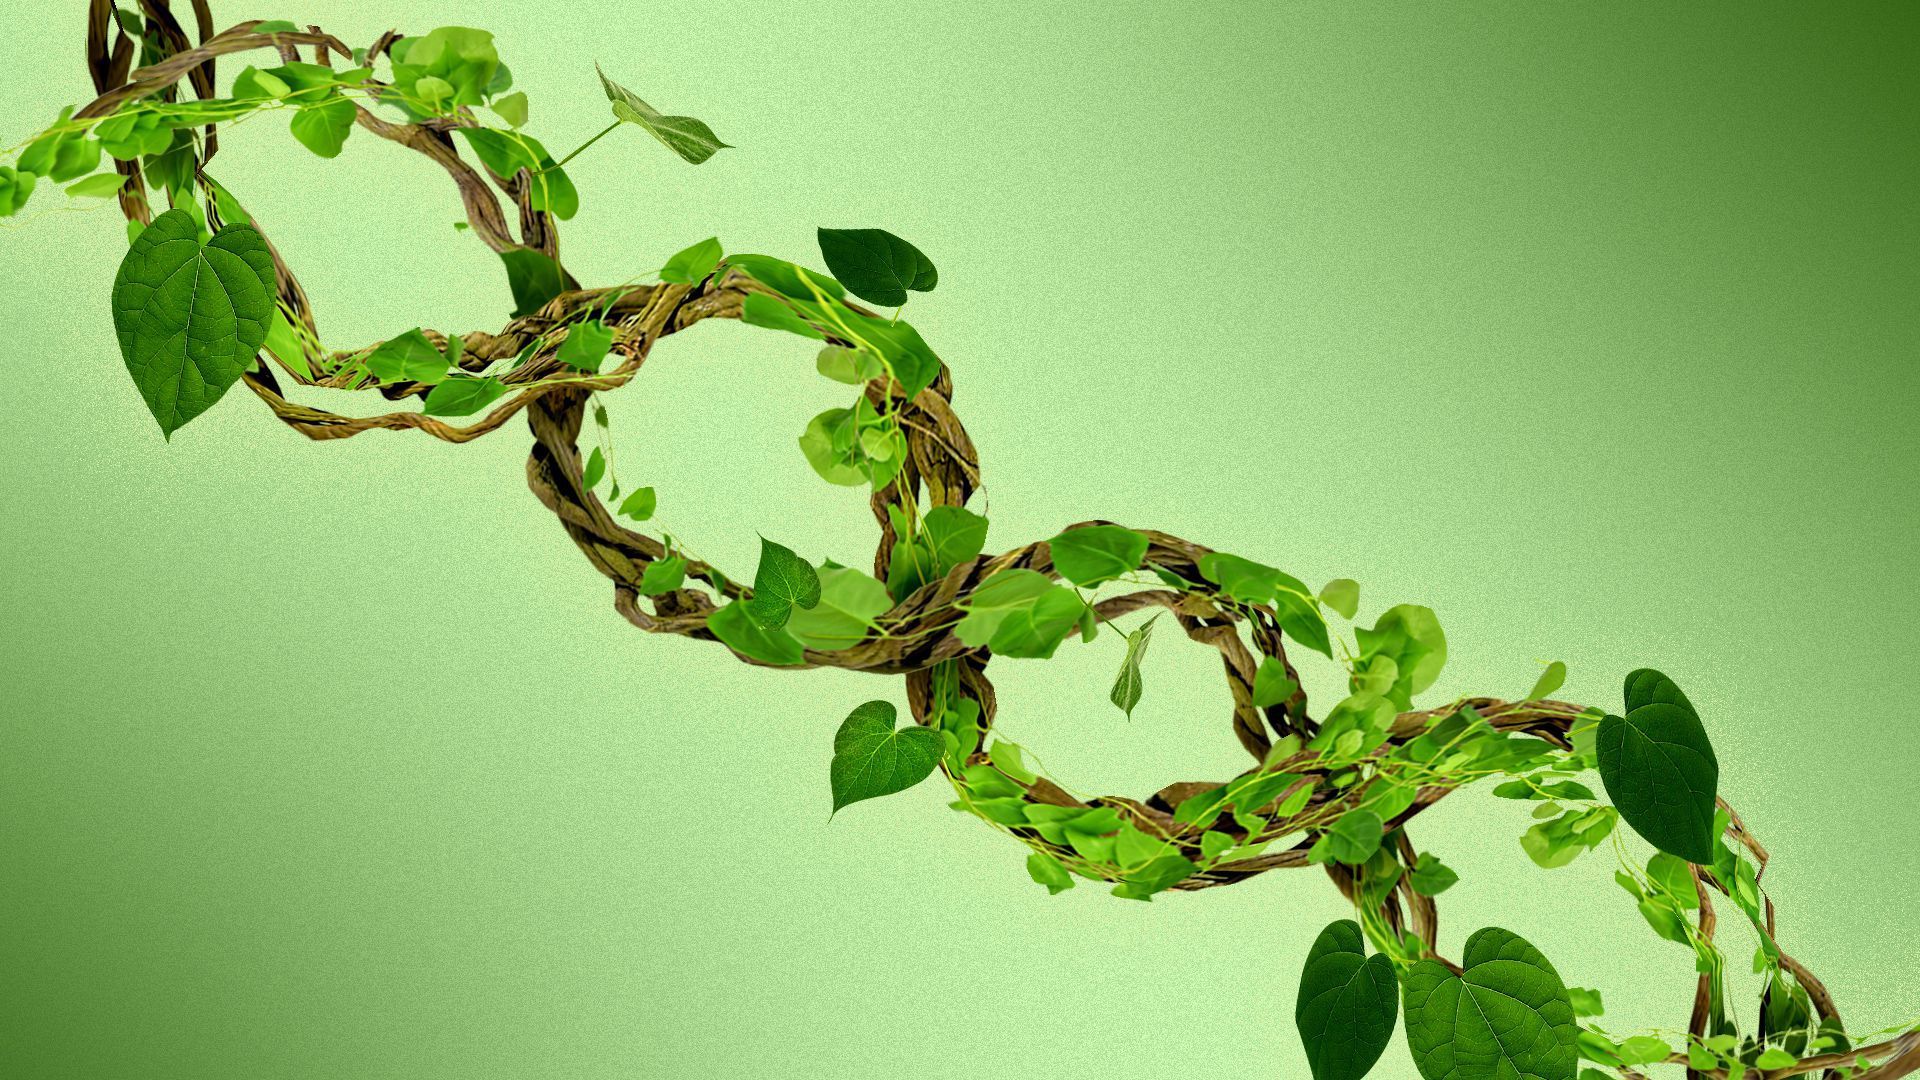 Illustration of vines growing in DNA shape